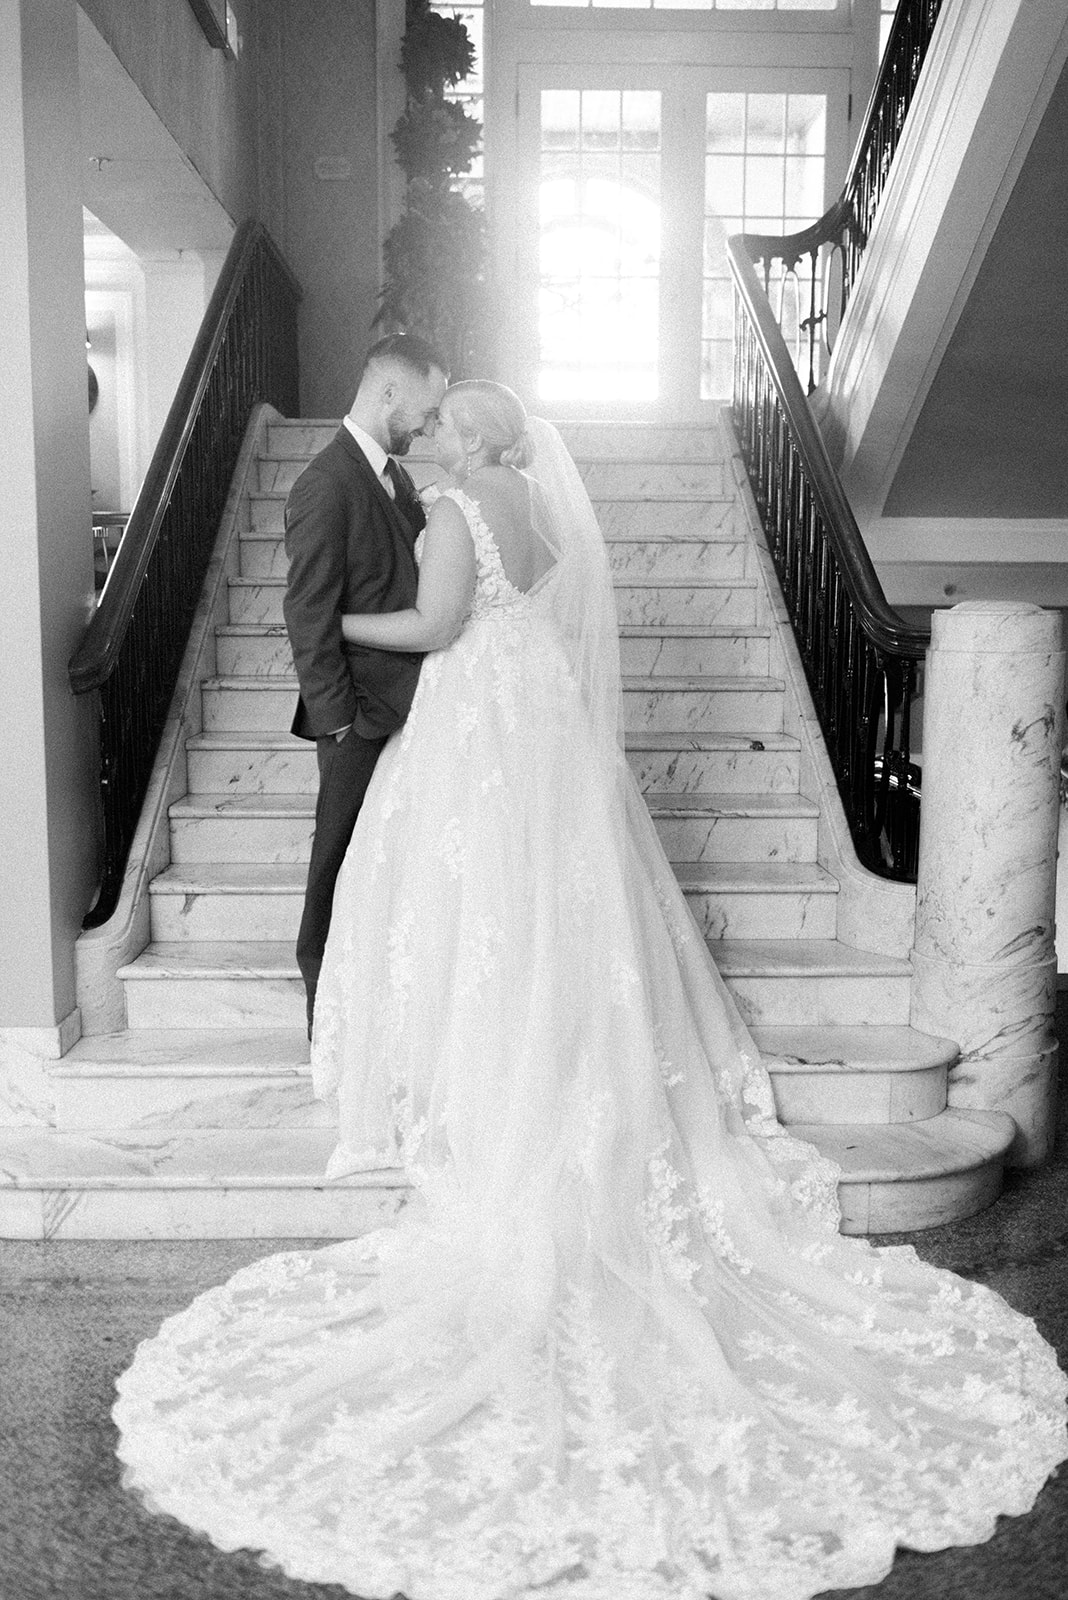 Pennsylvania wedding photographer captures couple on stairs embracing